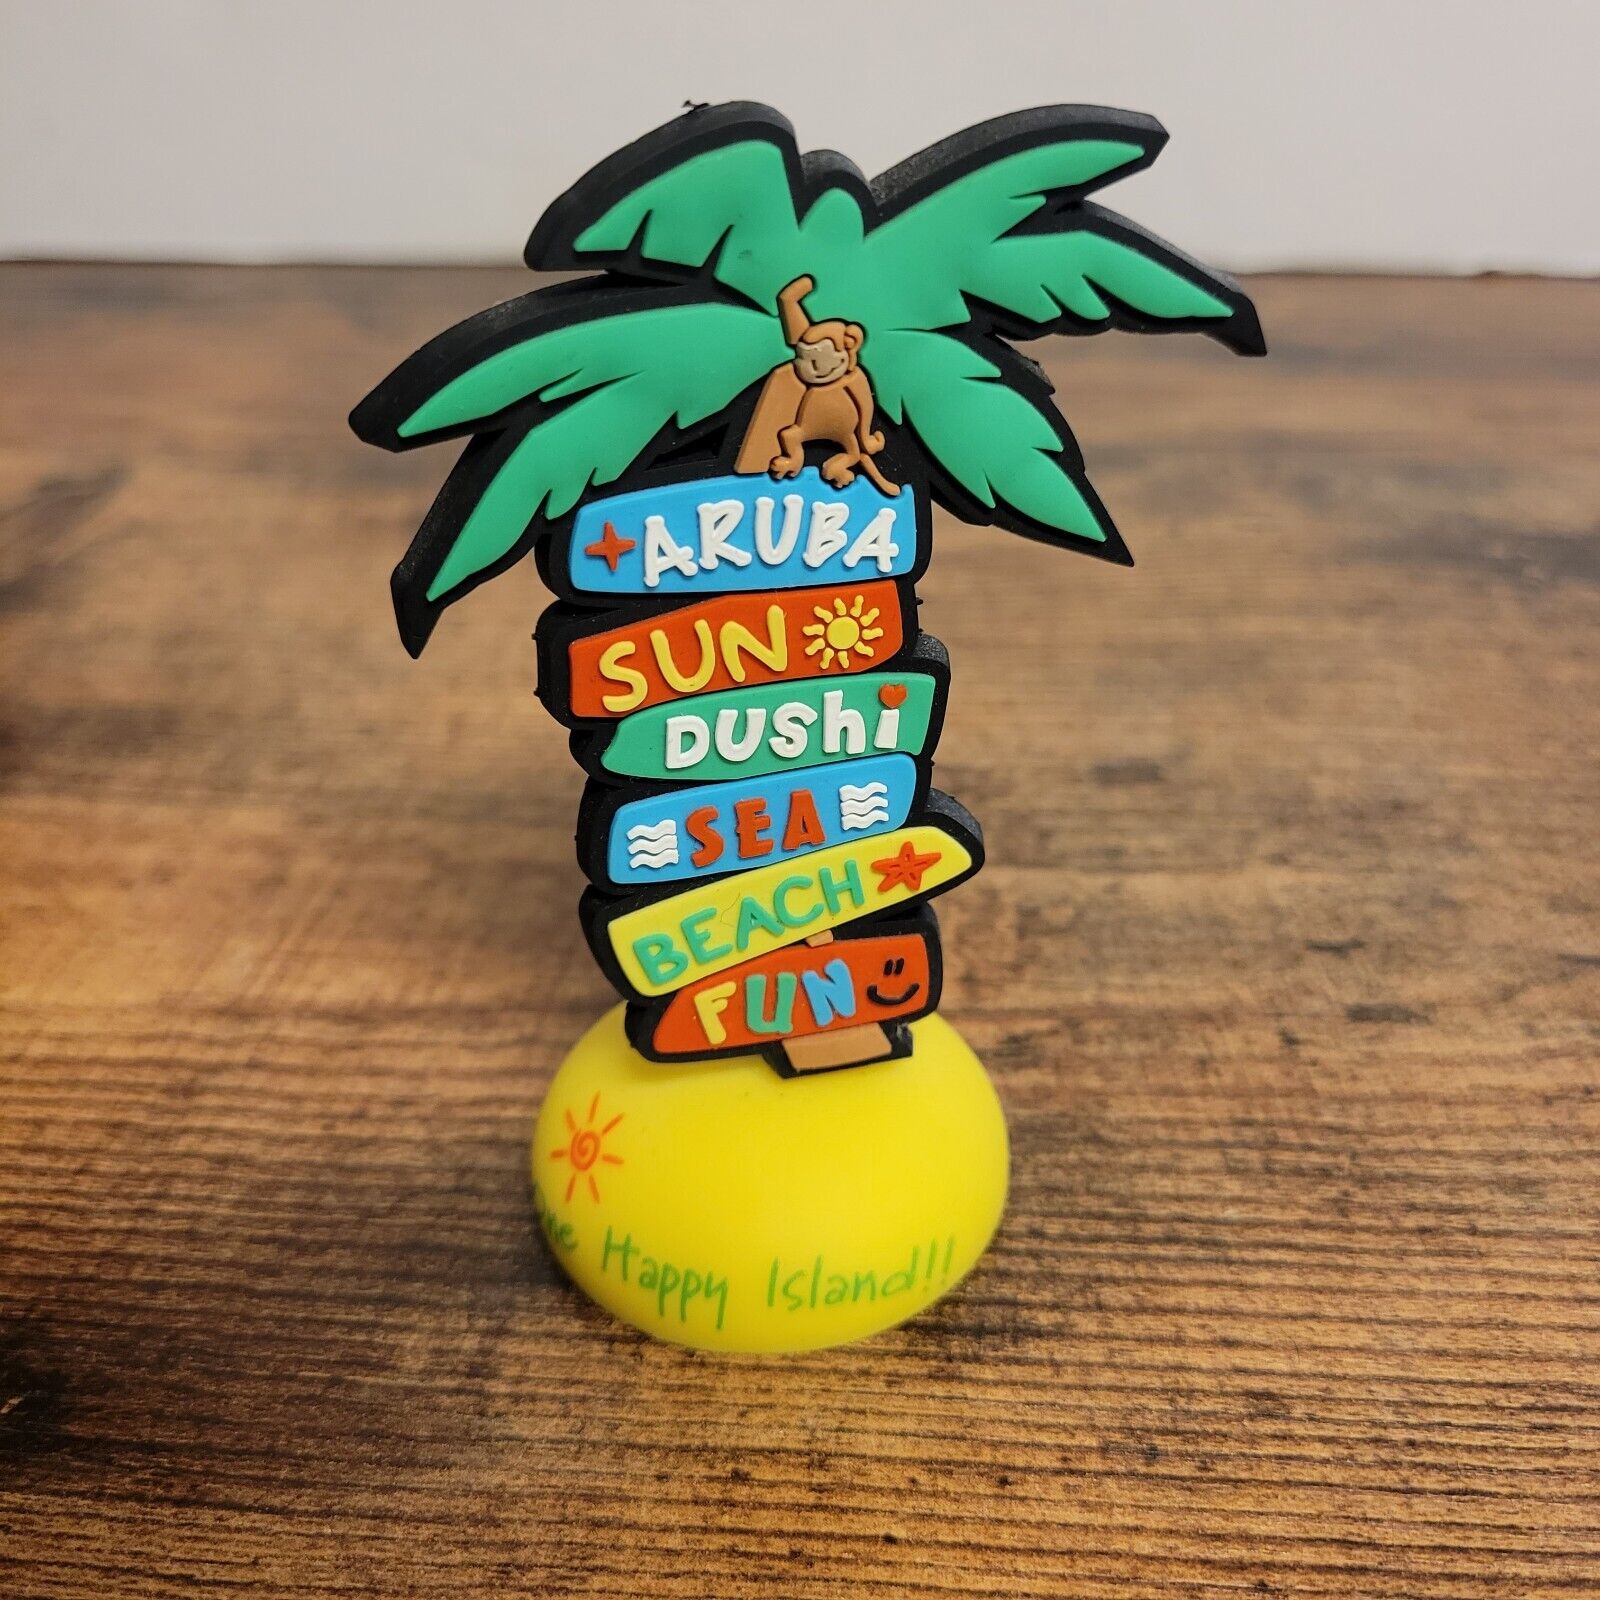 Aruba - One Happy Island  desk souvenir - Sun,Dushi,Sea,Beach,Fun - Palm Trees 